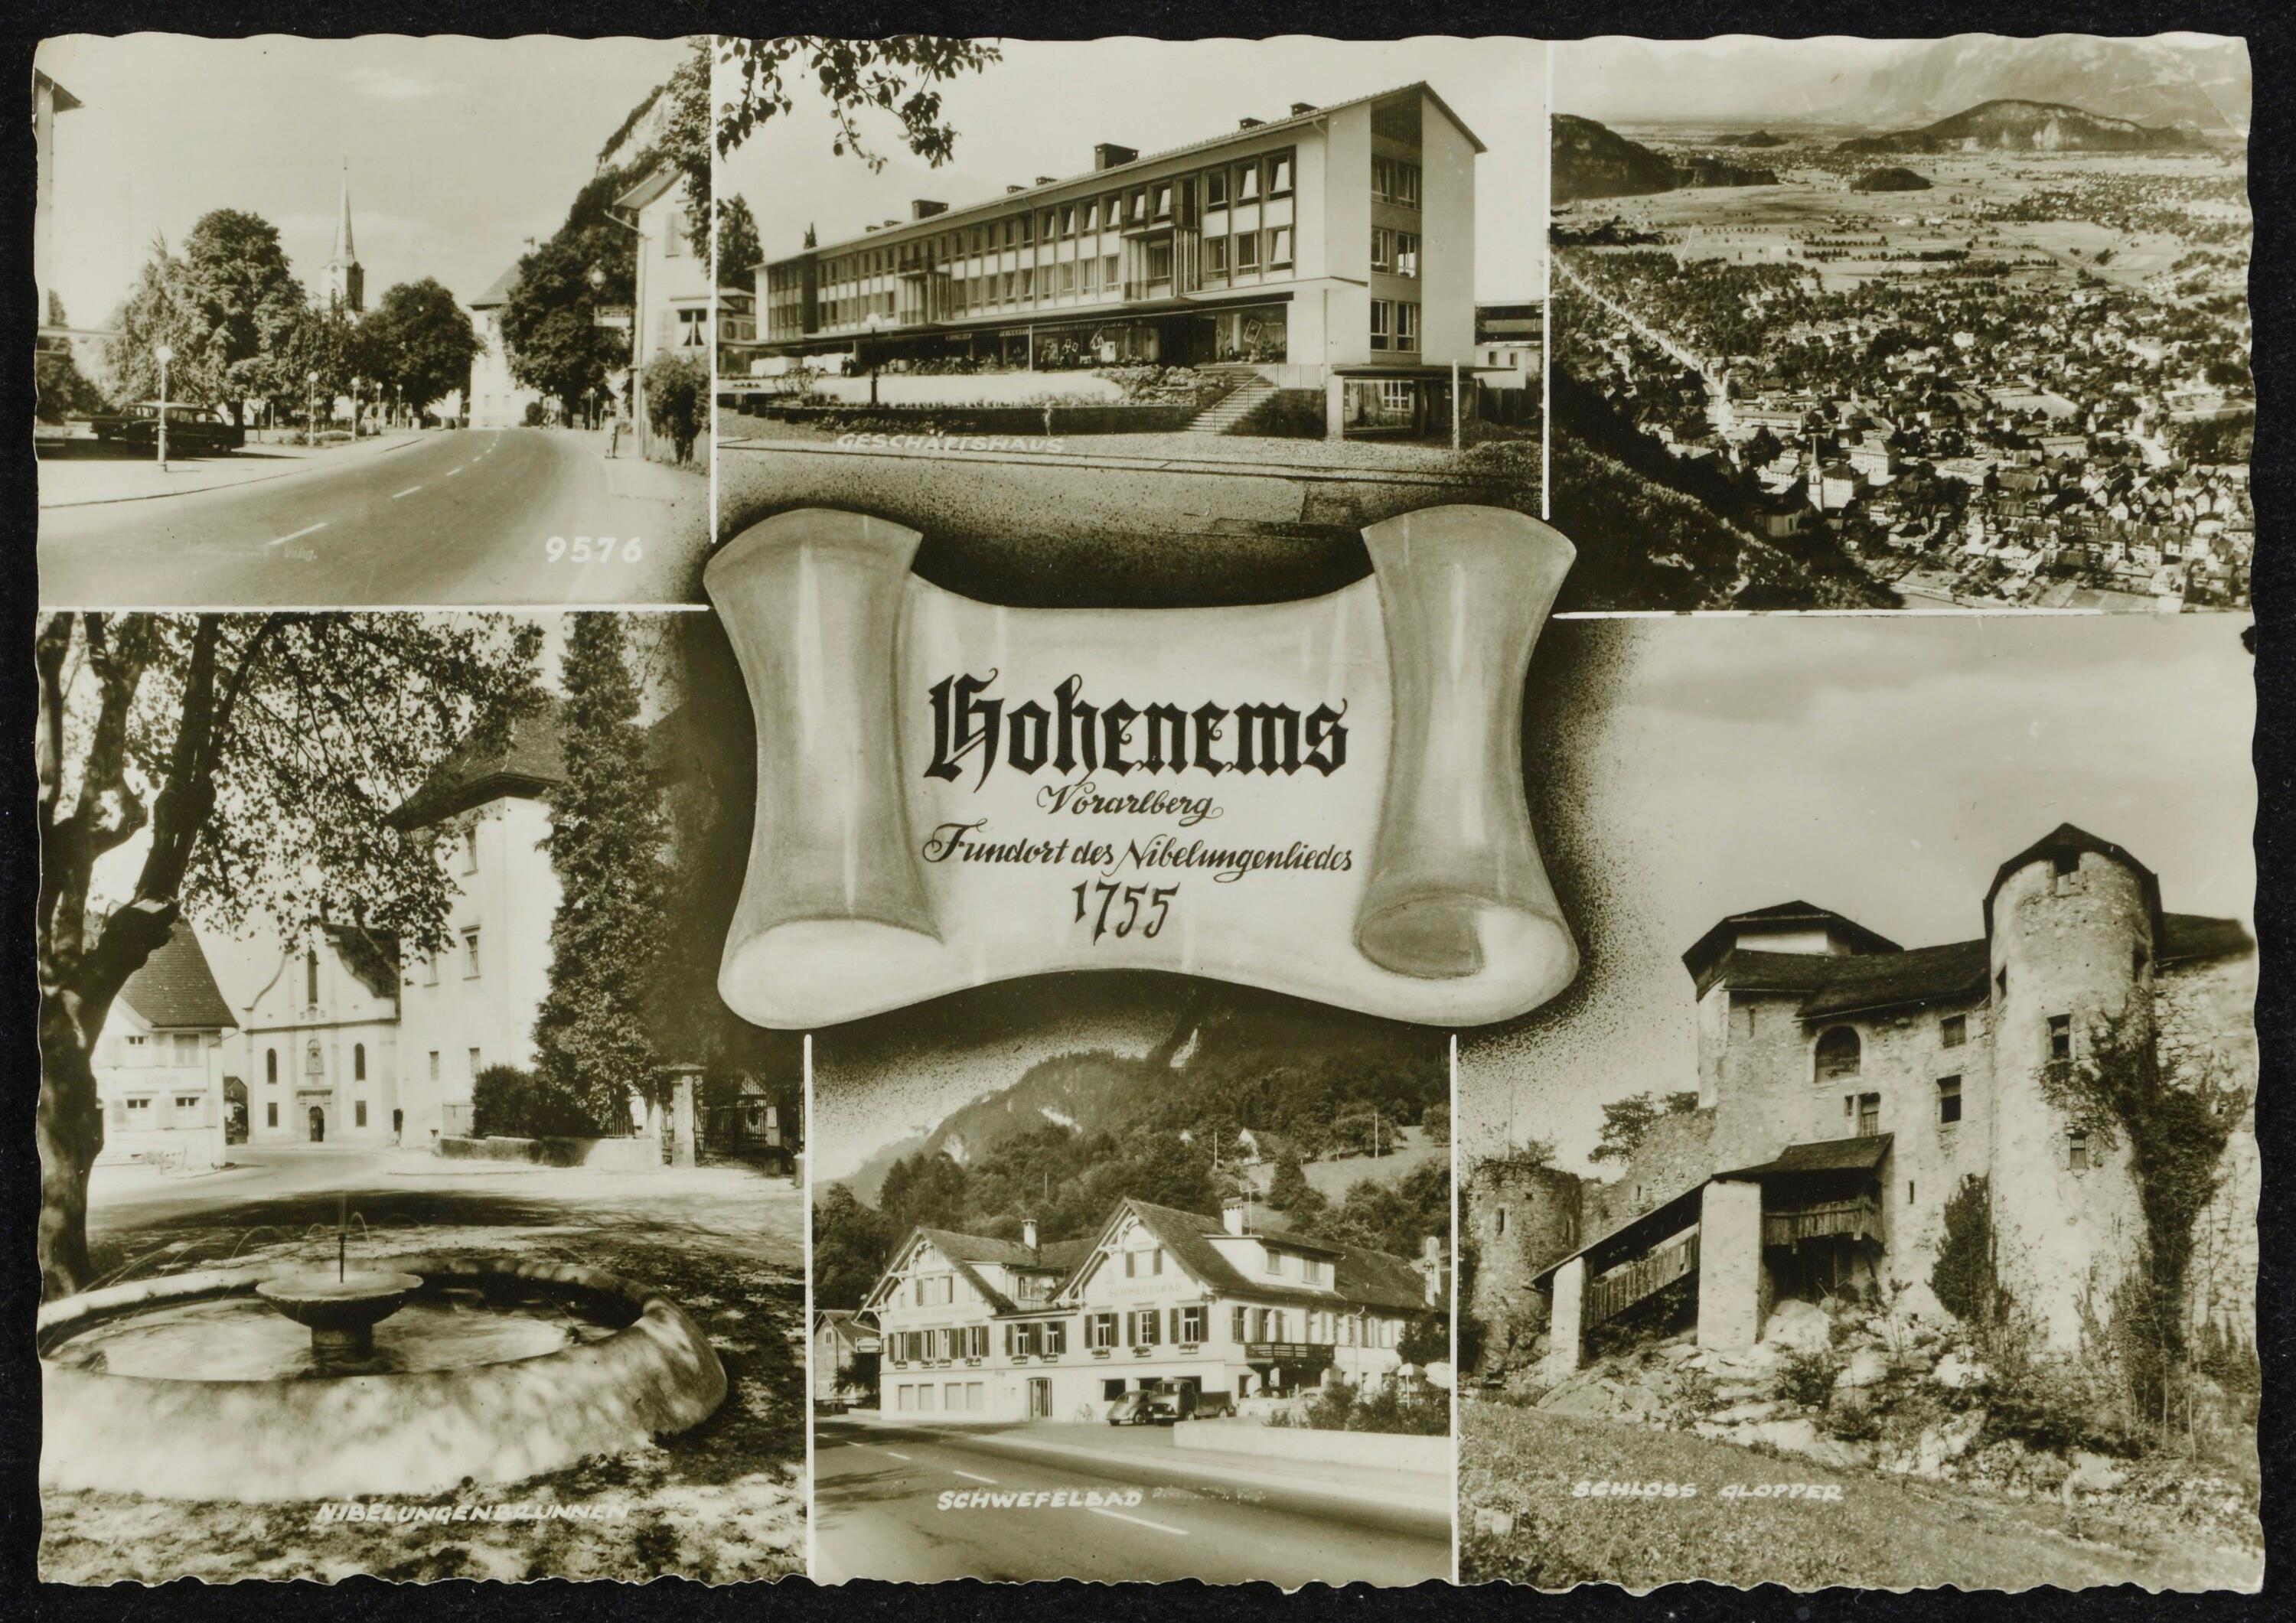 Hohenems Vorarlberg></div>


    <hr>
    <div class=